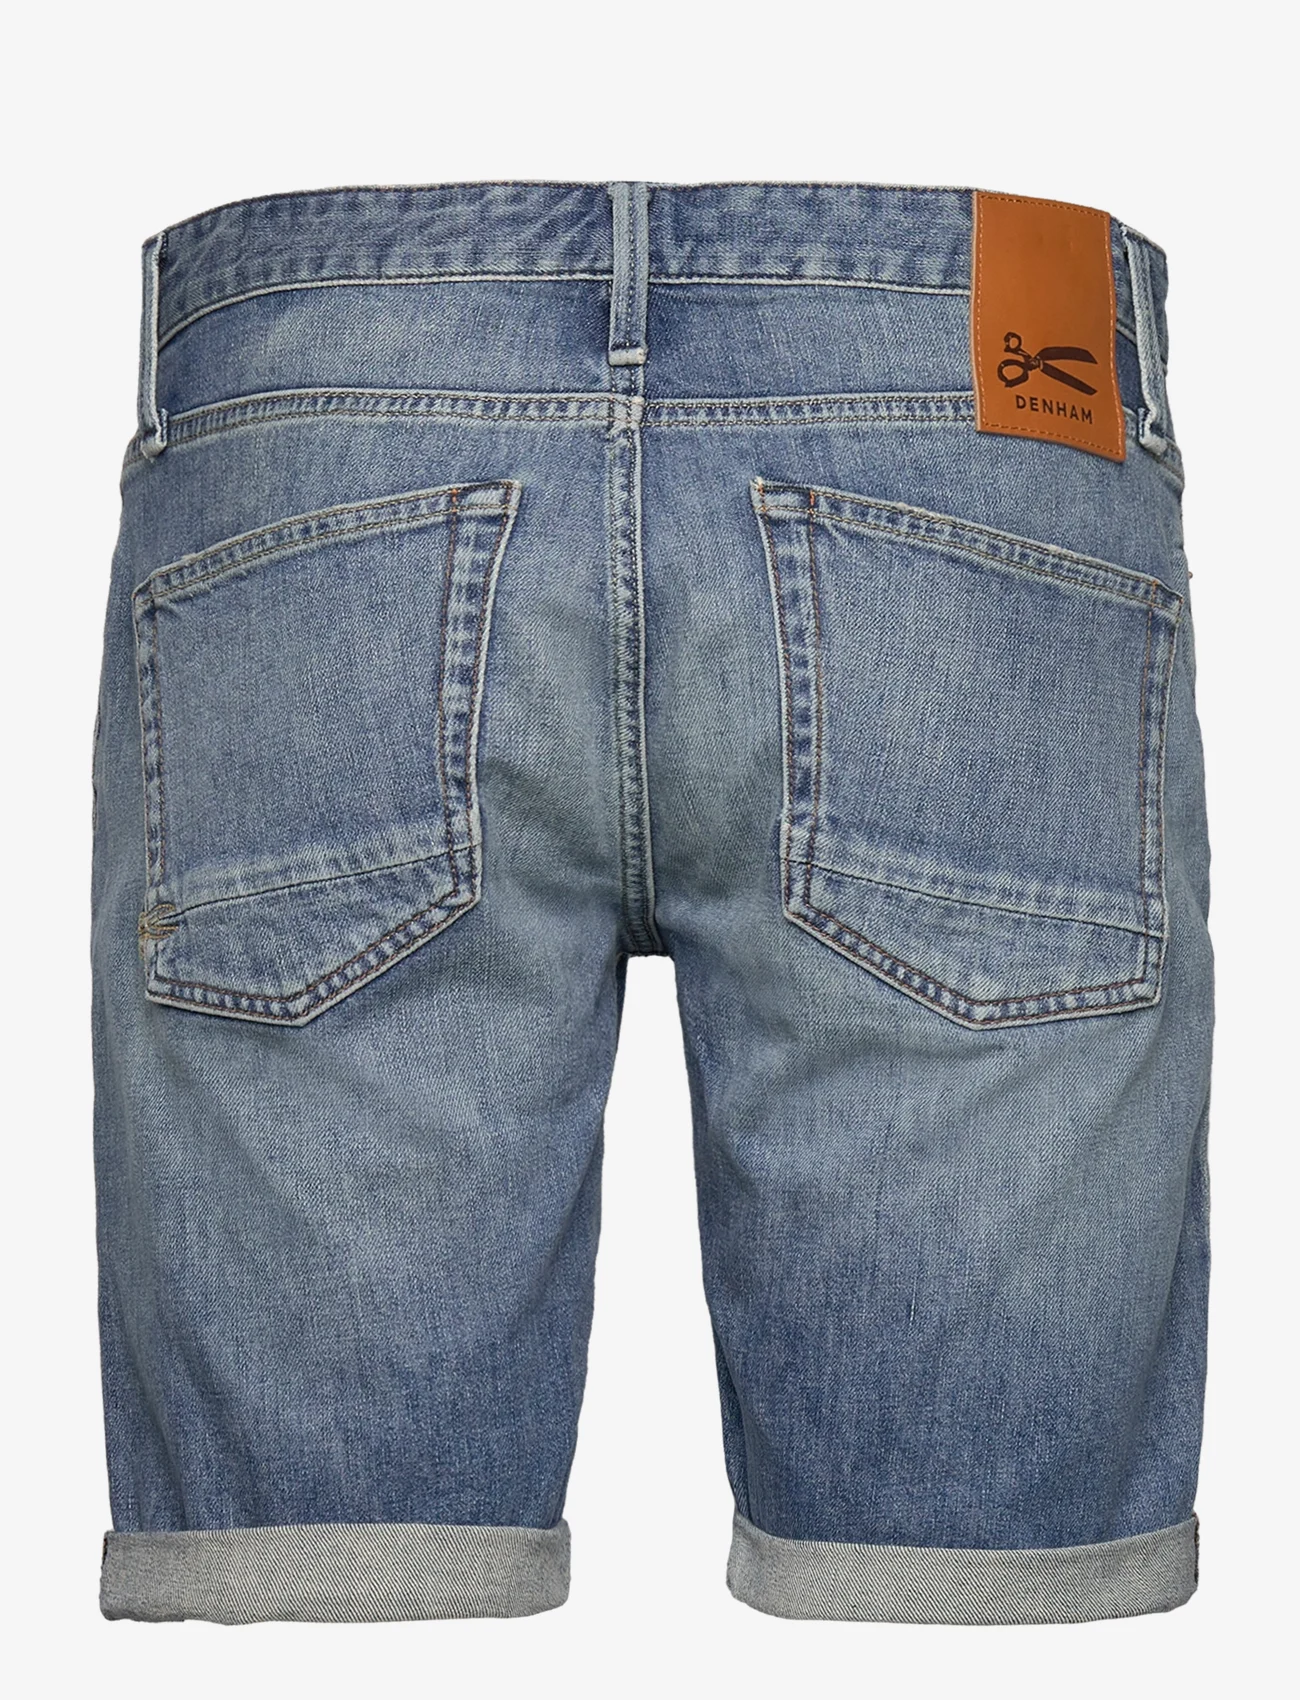 Denham - Razor - jeans shorts - mid blue - 1